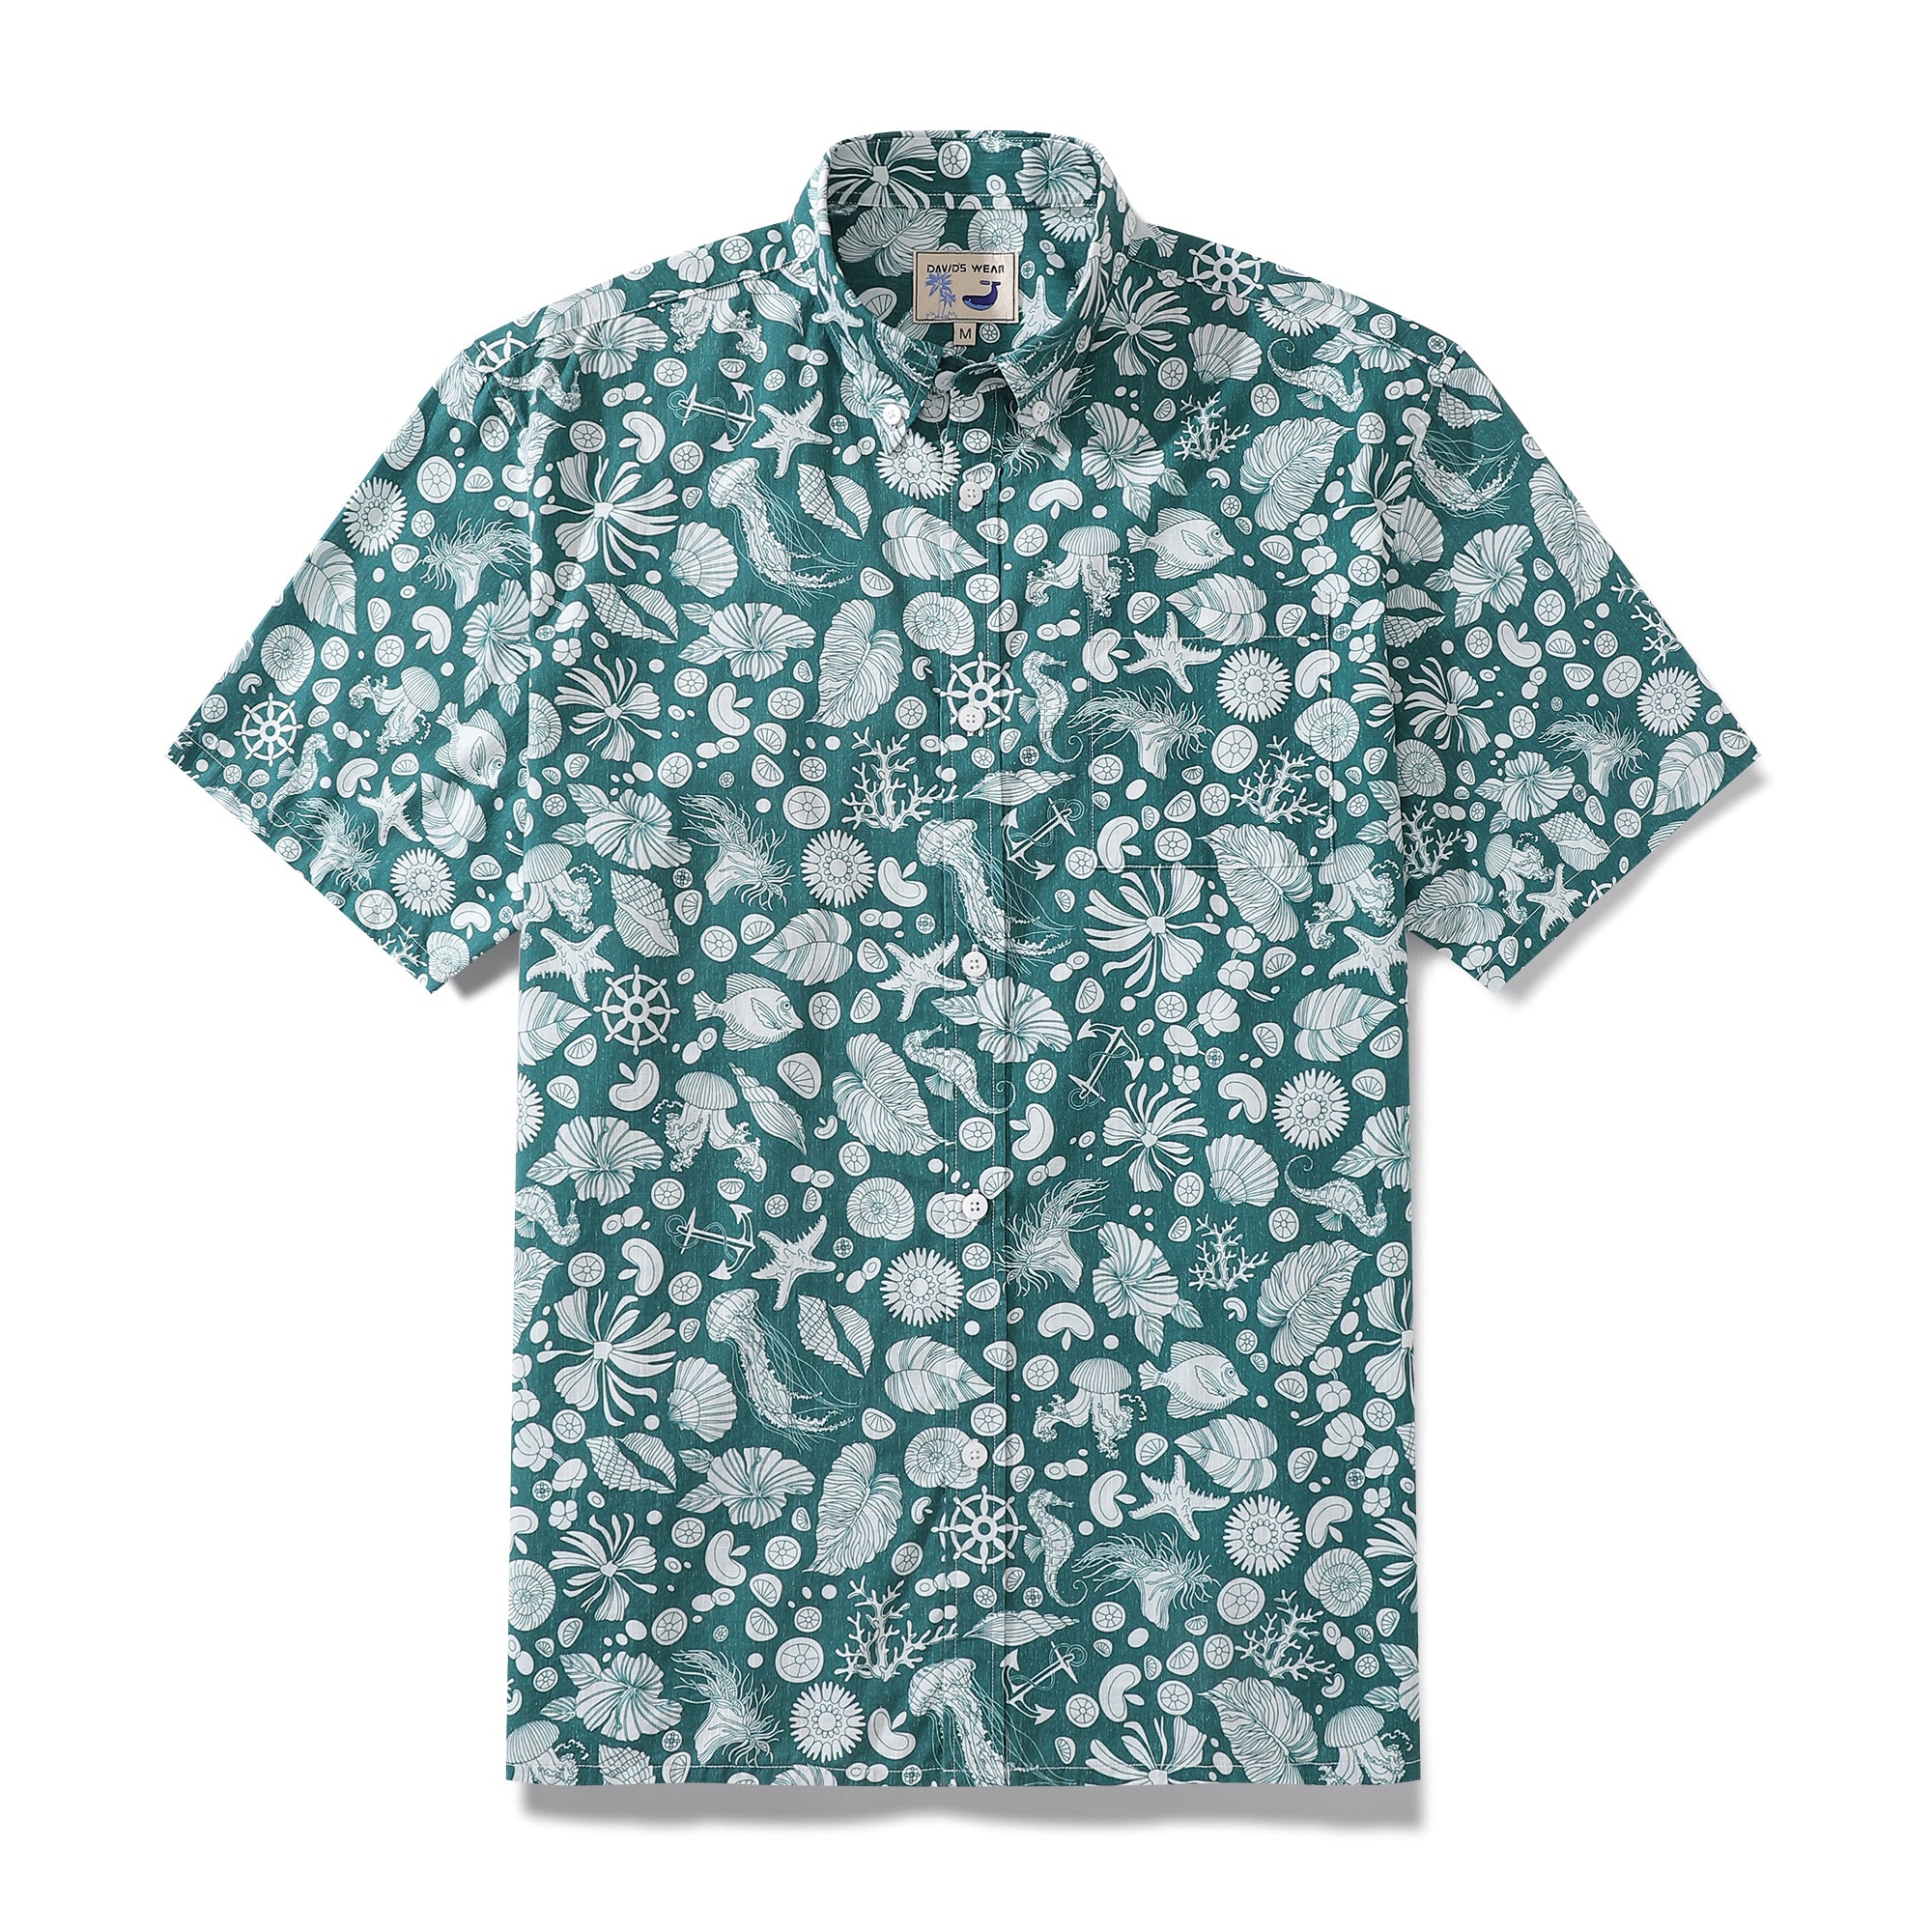 Men's Hawaiian Shirt Seabed strolling Print Cotton Button-down Short Sleeve Aloha Shirt